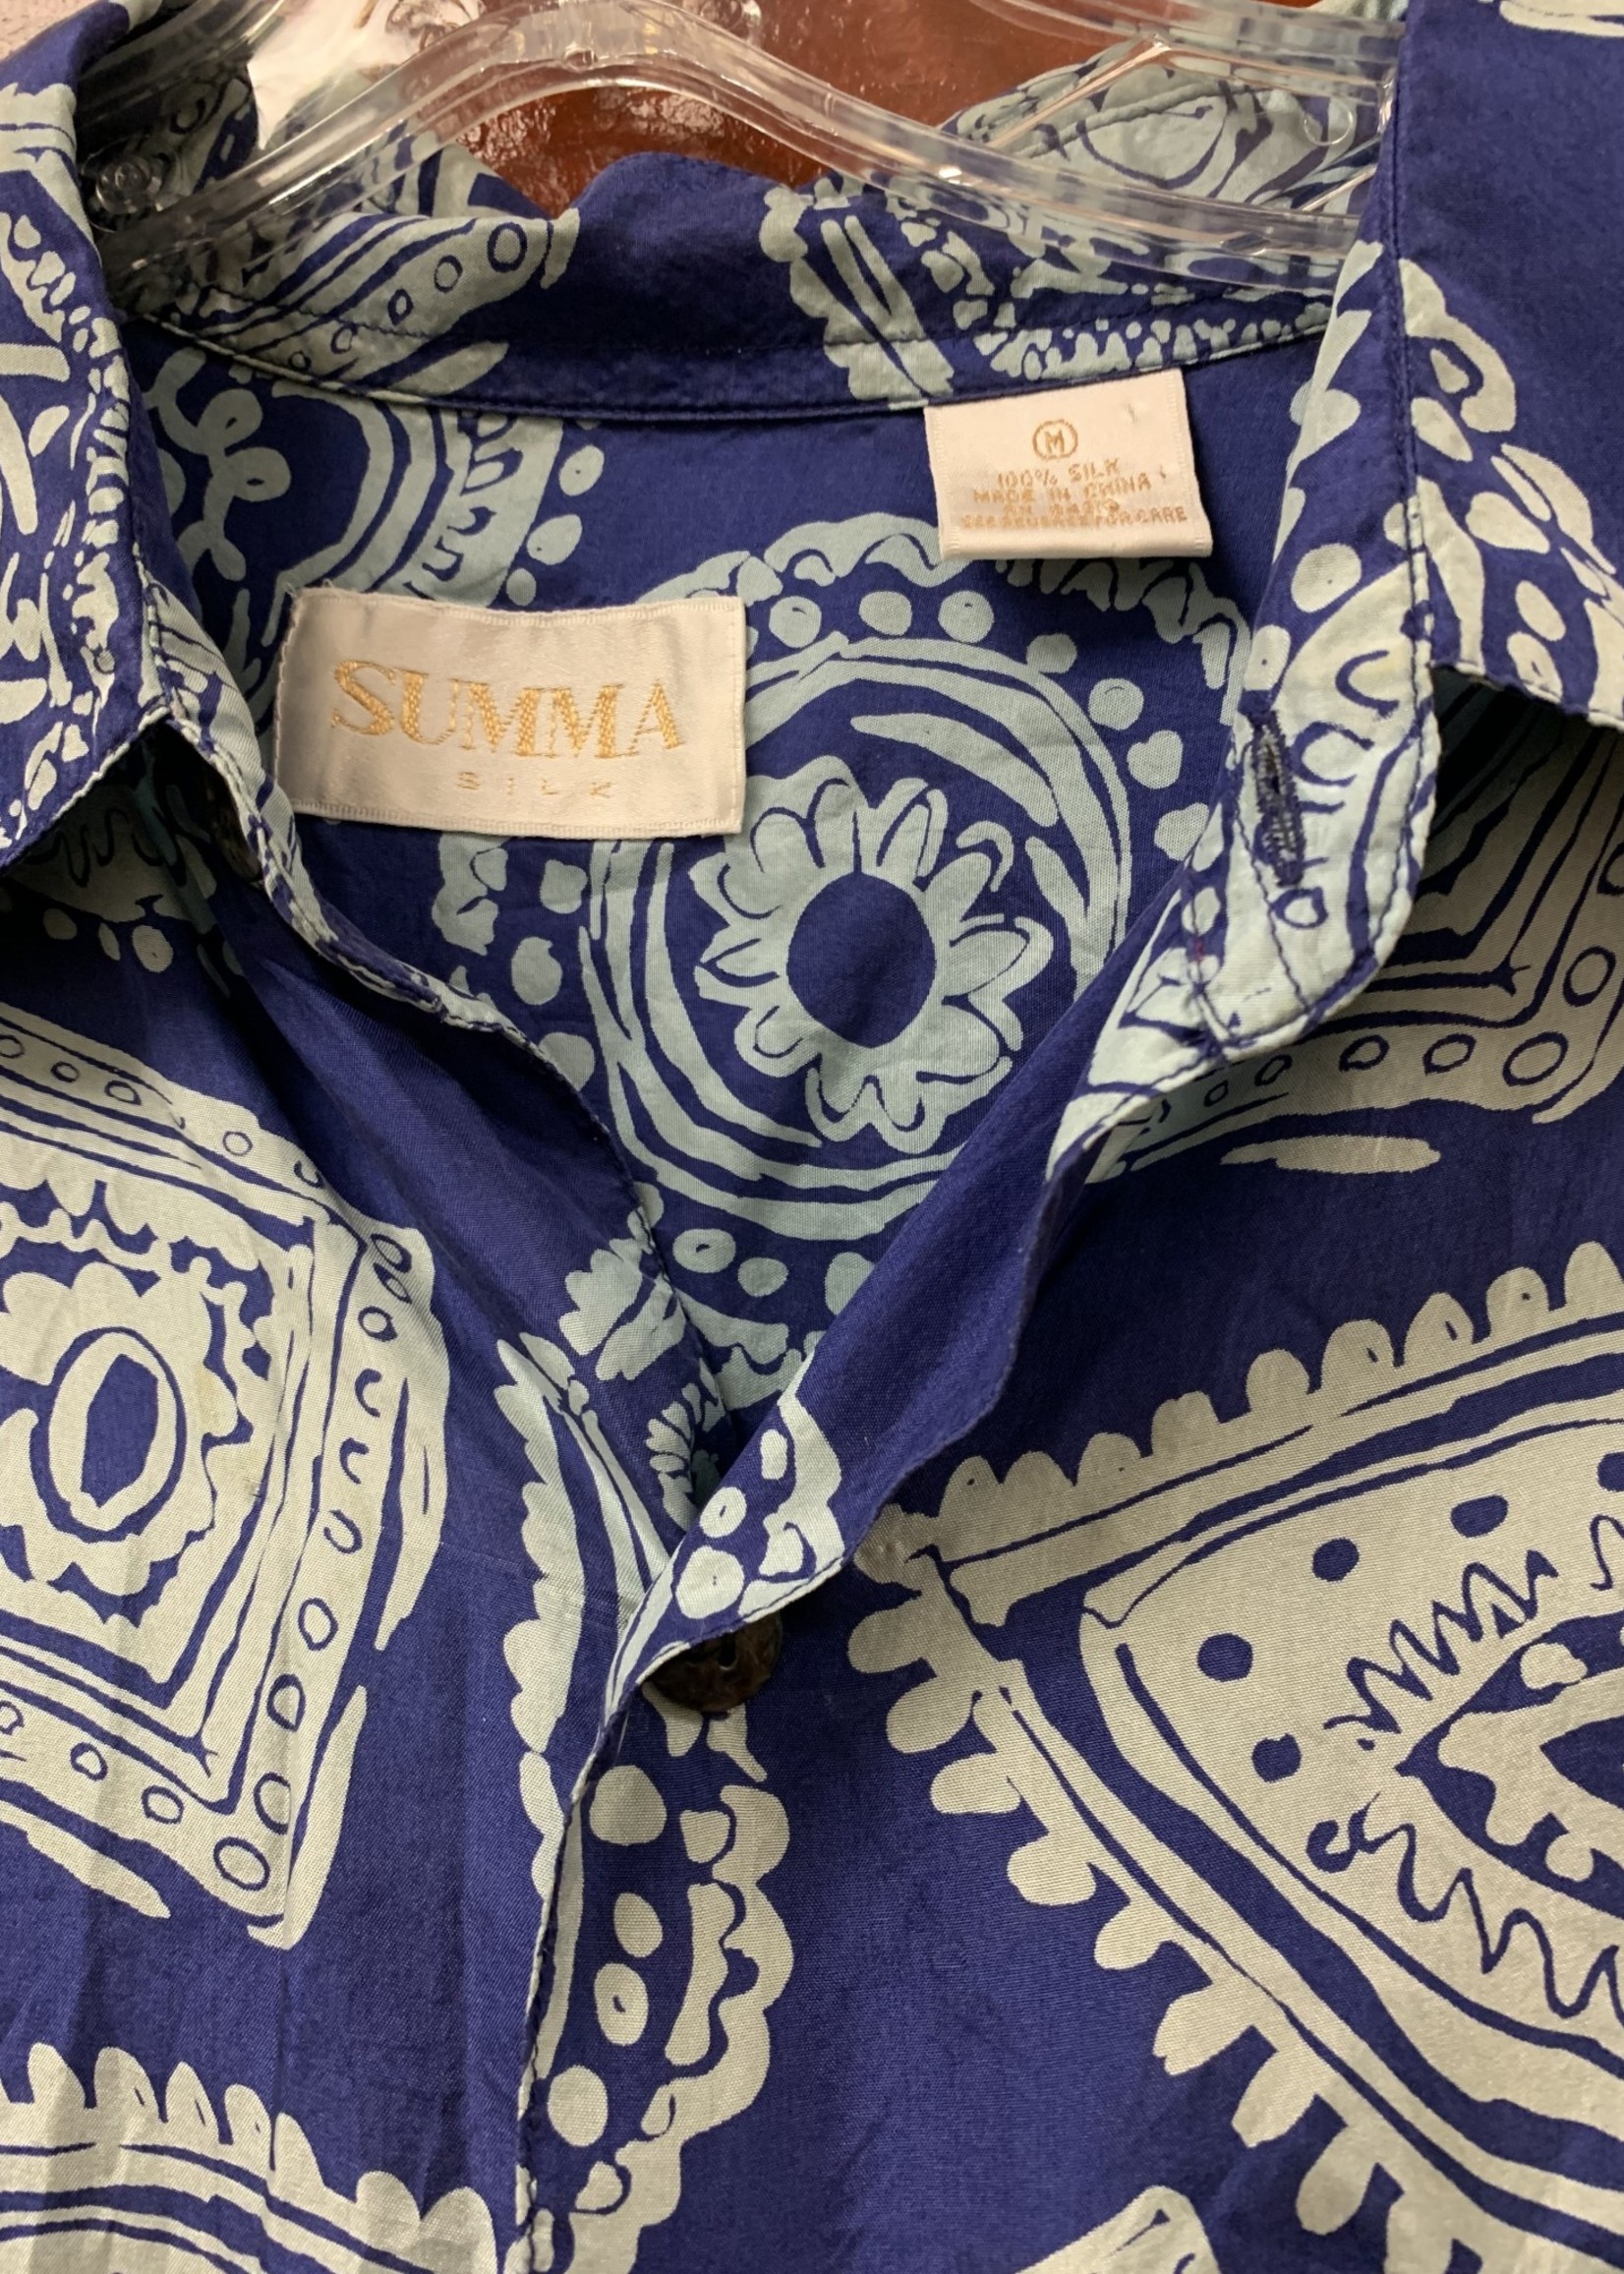 Mission Zero Men's Vintage Aloha Shirt - Silk Summa- blue and white floral stamp Medium